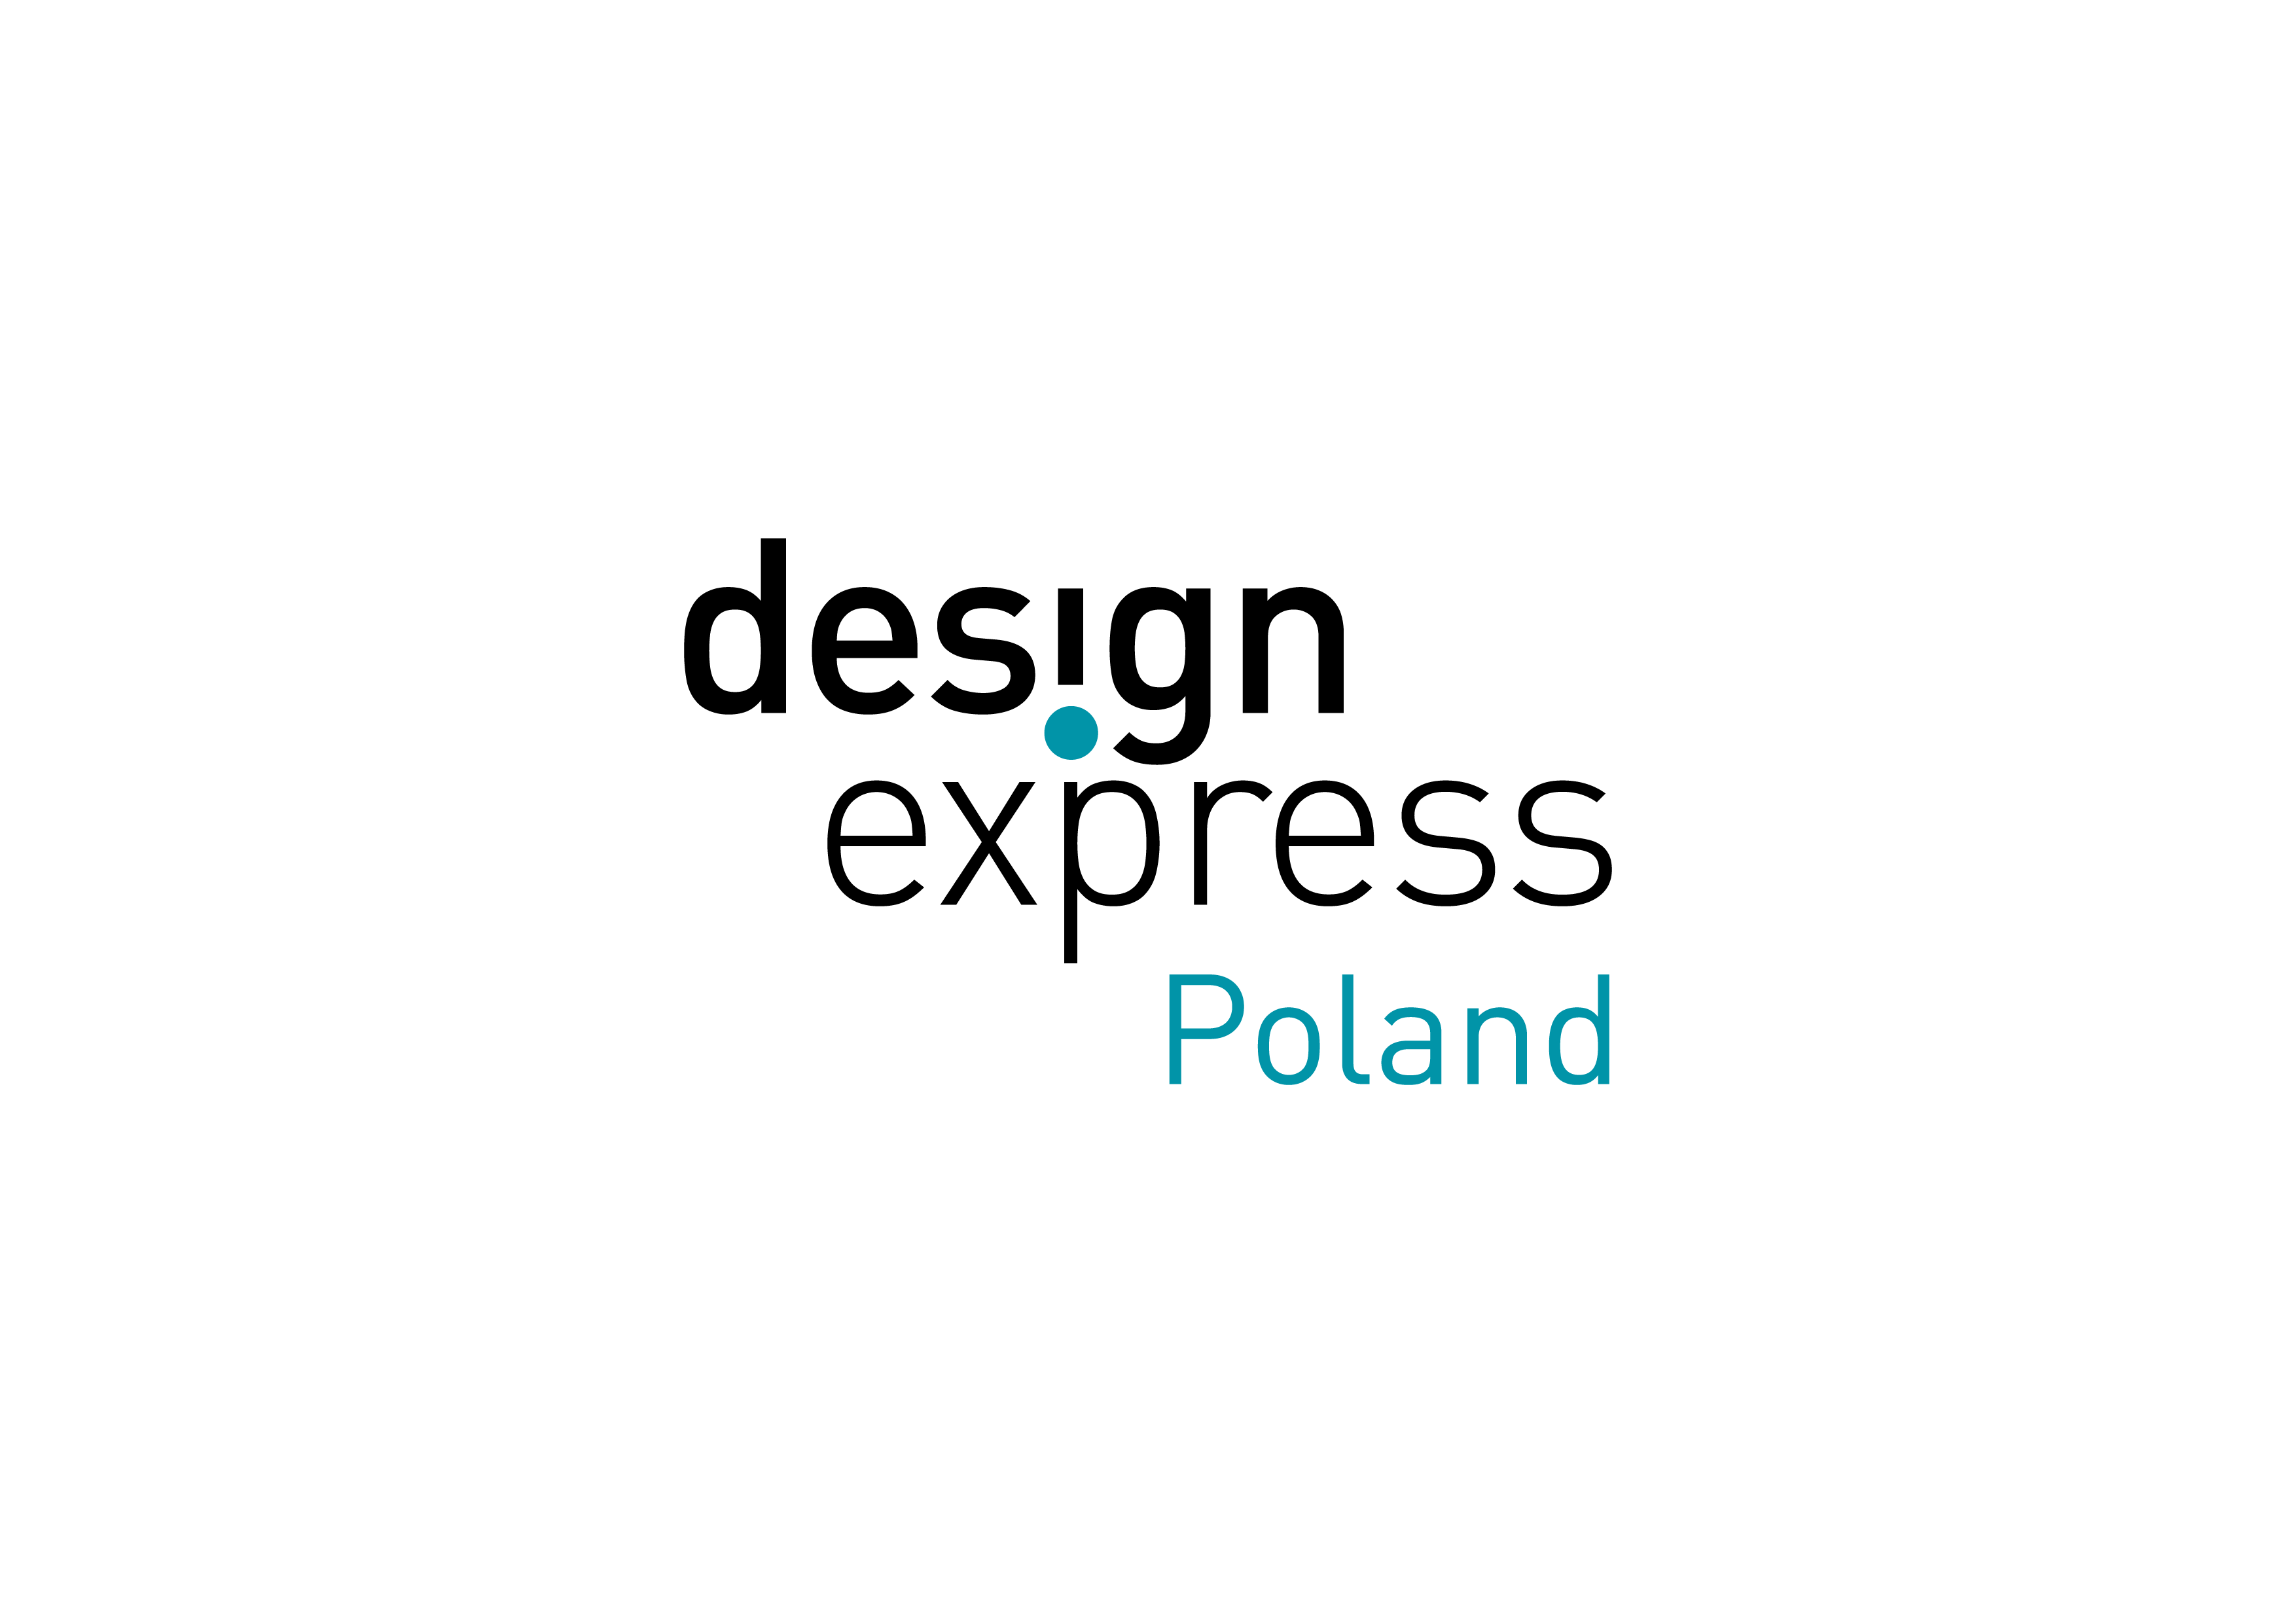 Logo Design Express Poland Sp. z o.o.